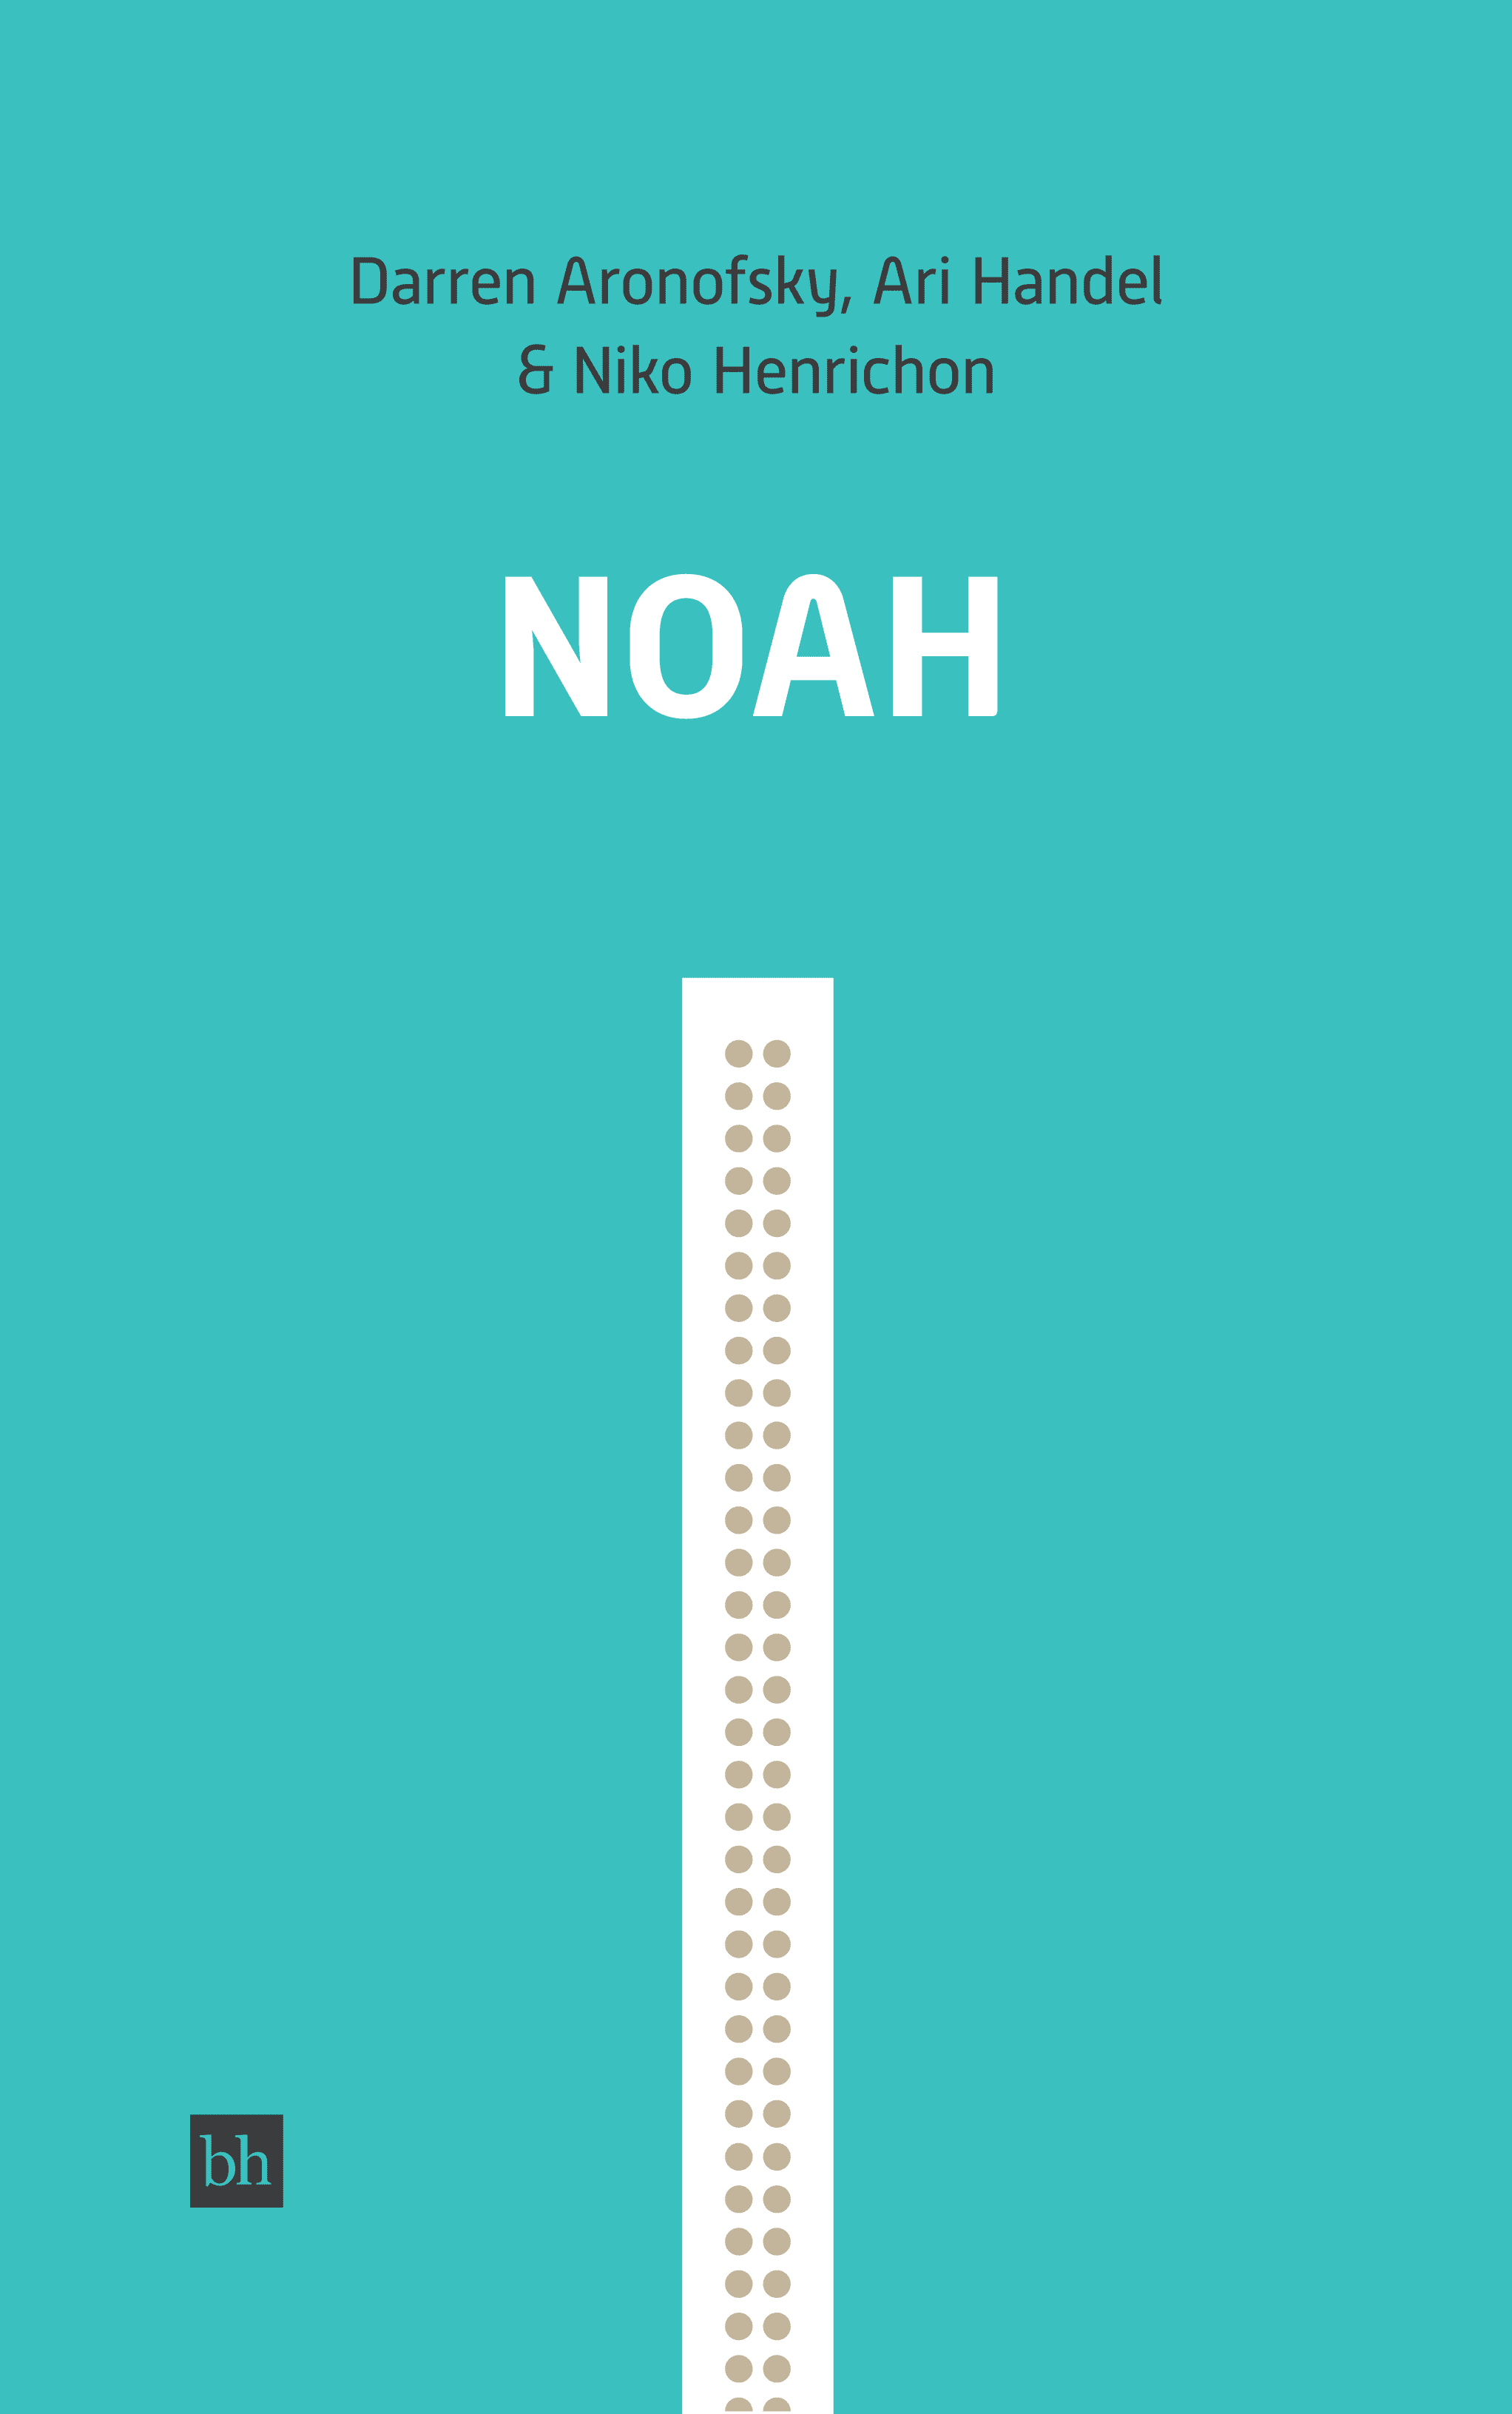 Book cover mock thumbnail for Noah